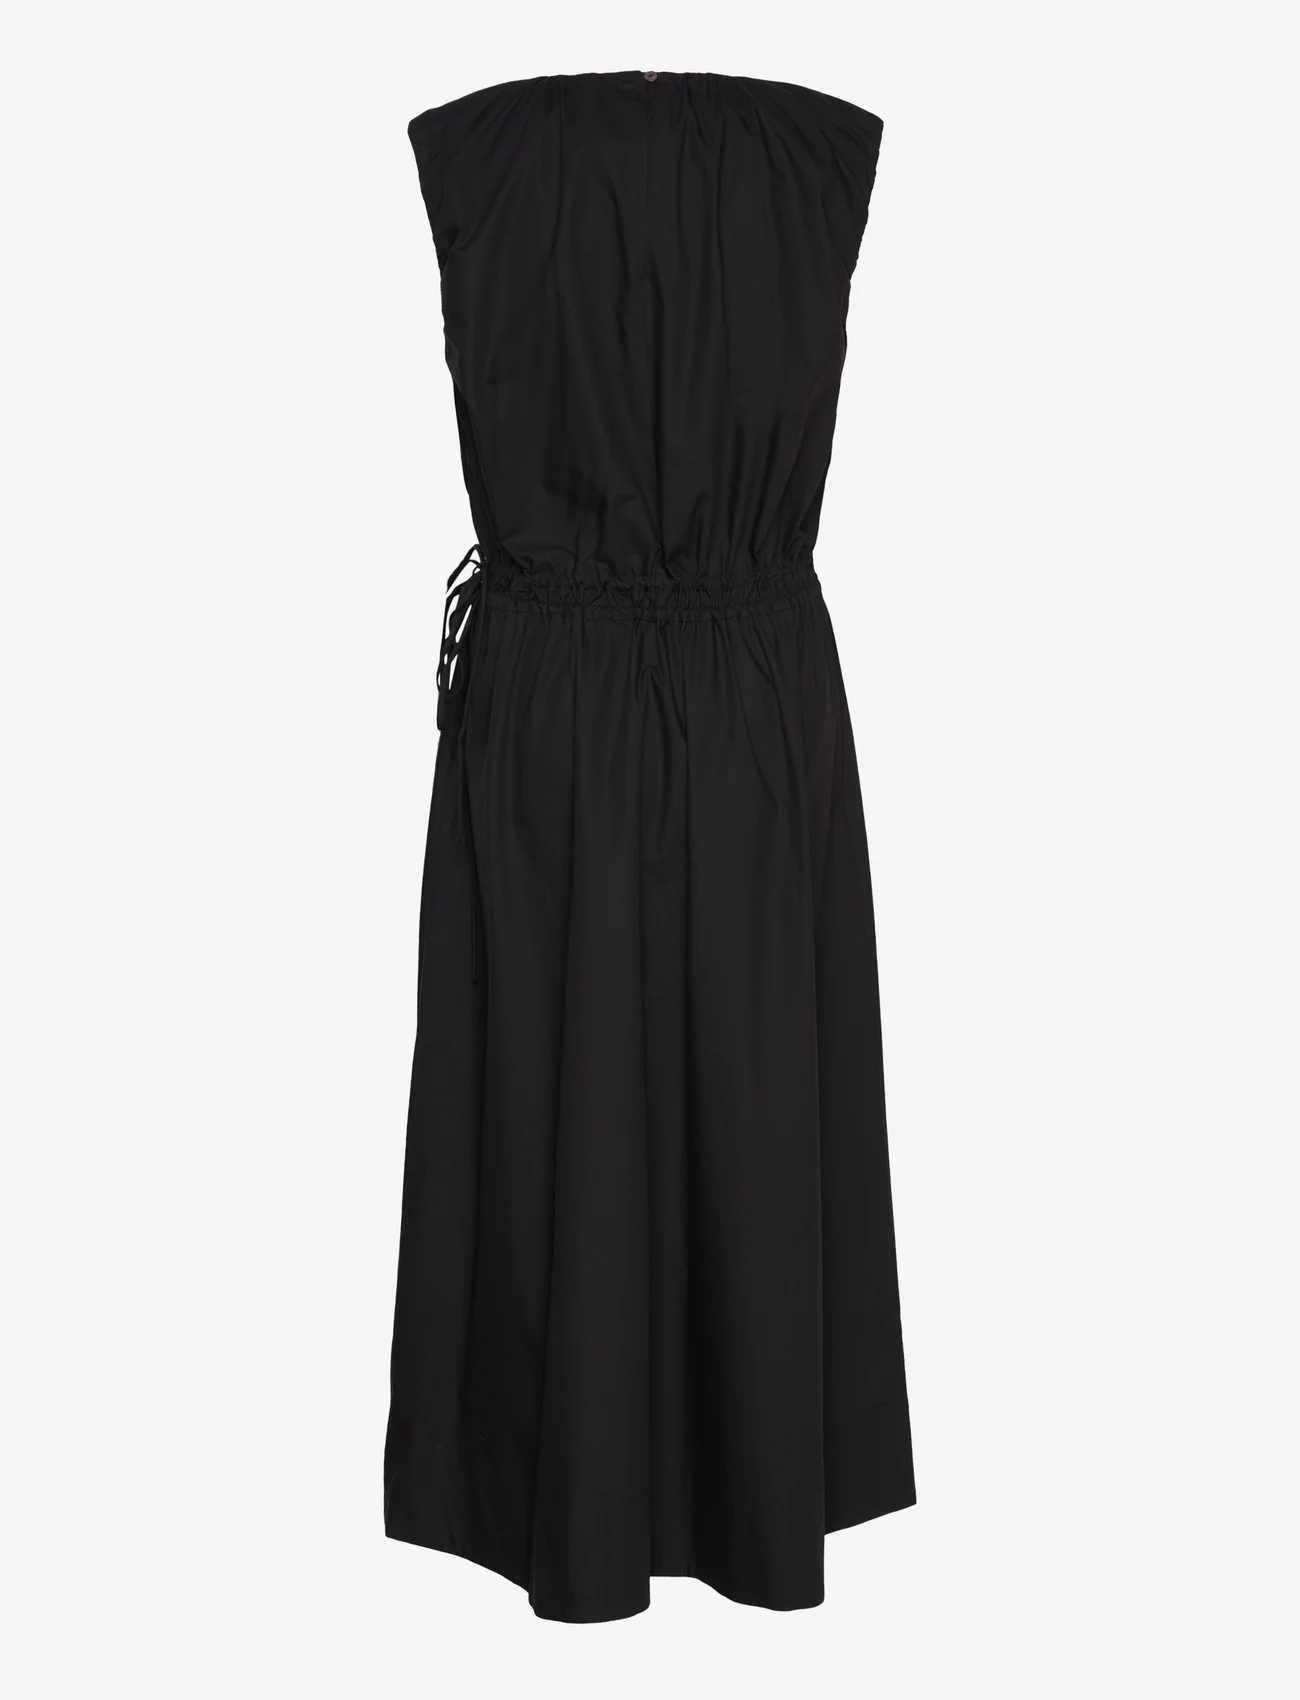 House Of Dagmar - COTTON POPLIN DRESS - midi kjoler - black - 1